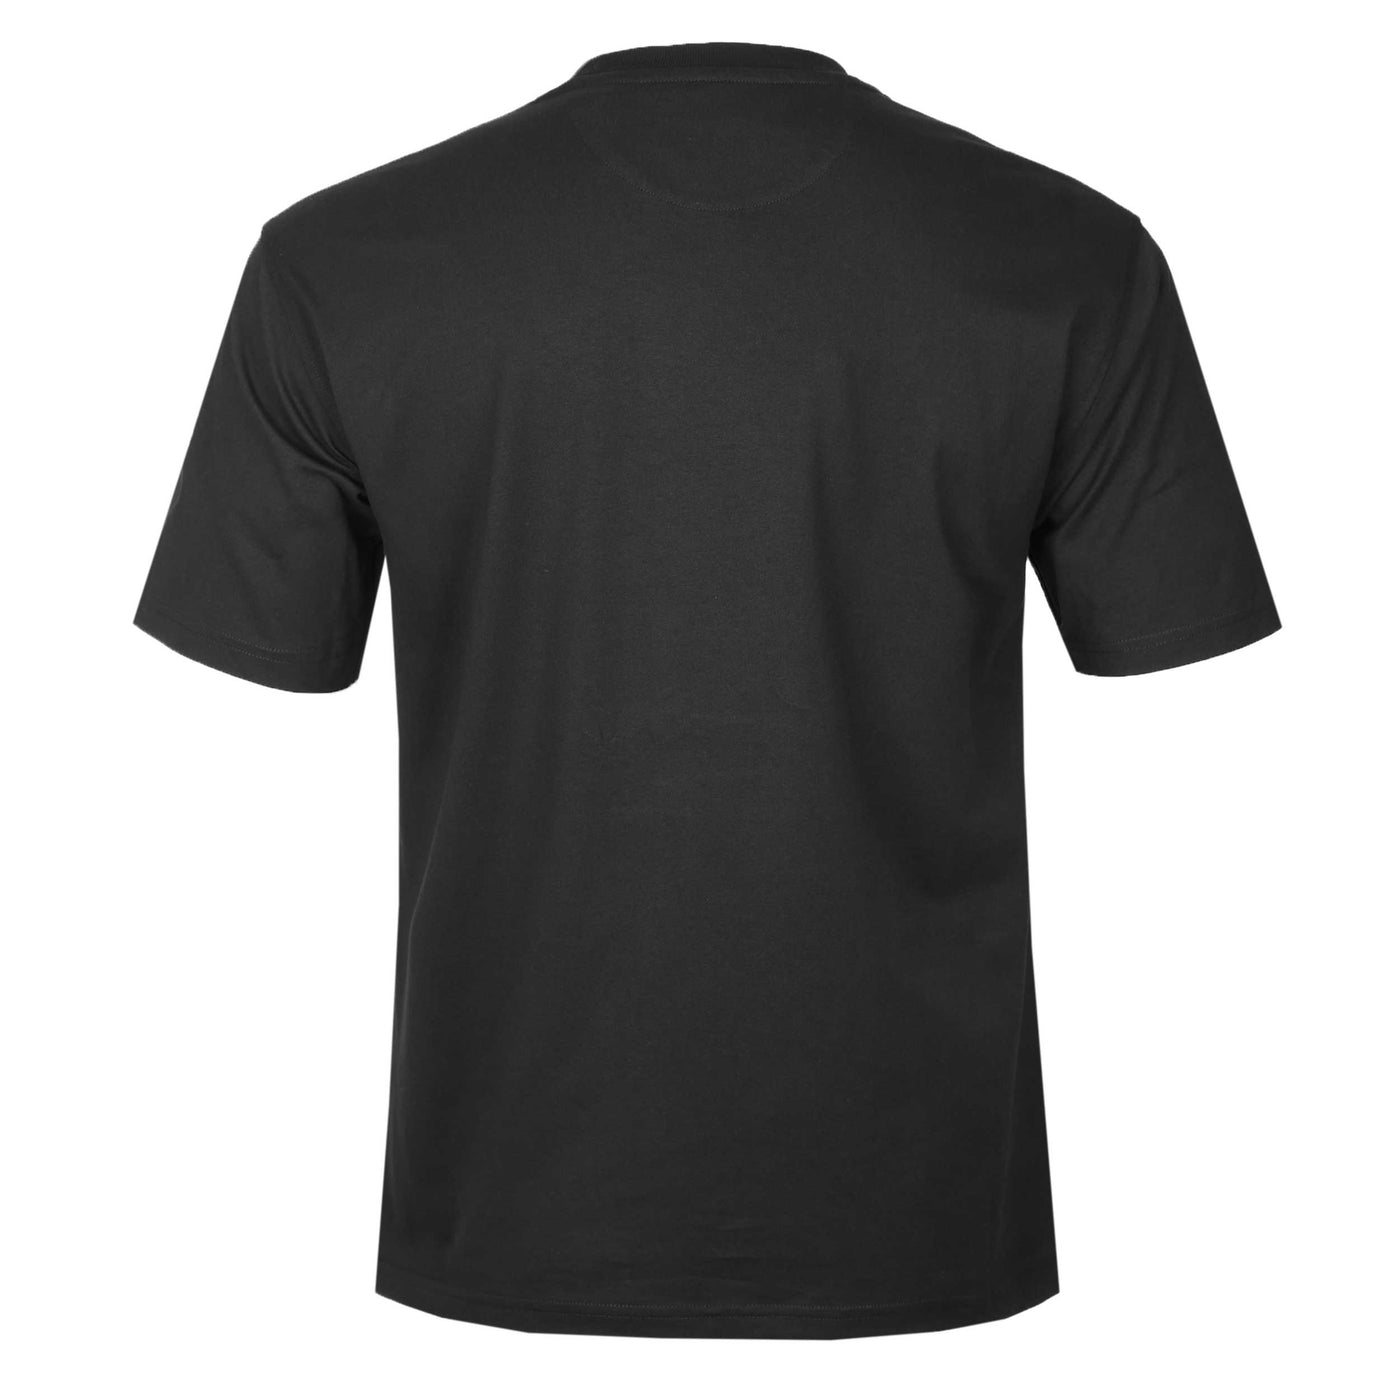 Belstaff Flow T-Shirt in Black